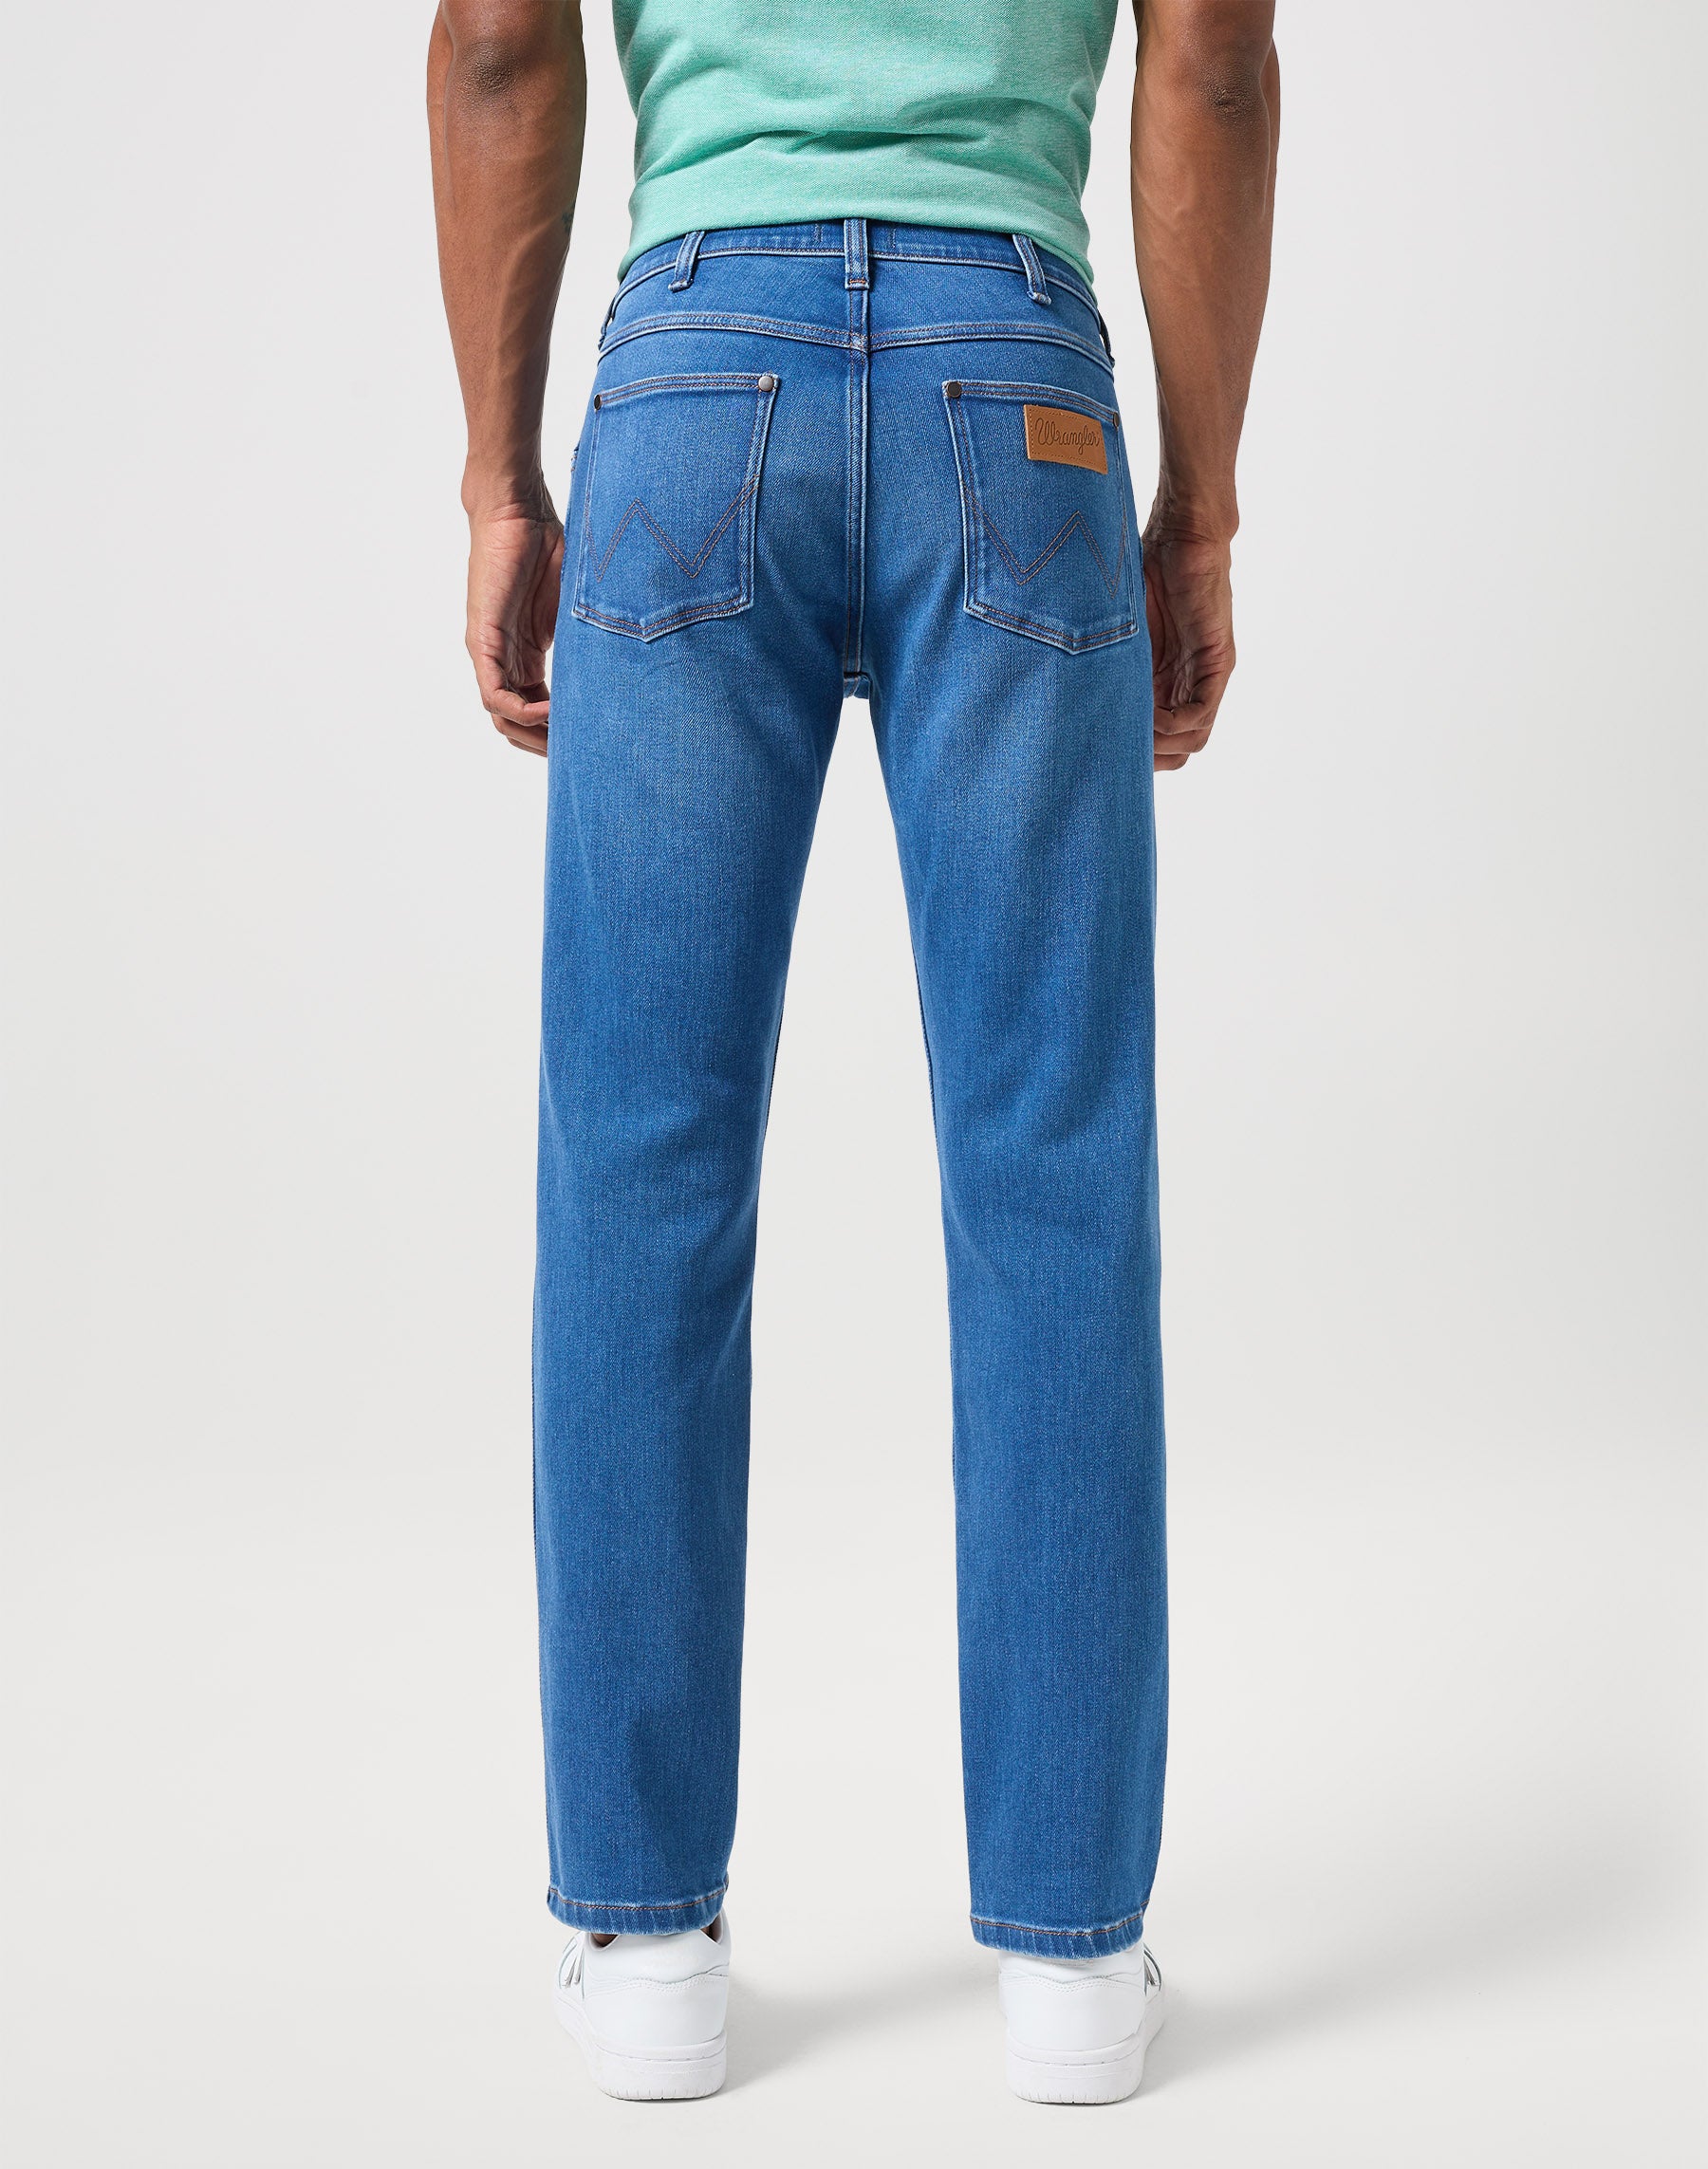 Greensboro High Stretch in Rustic Jeans Wrangler   